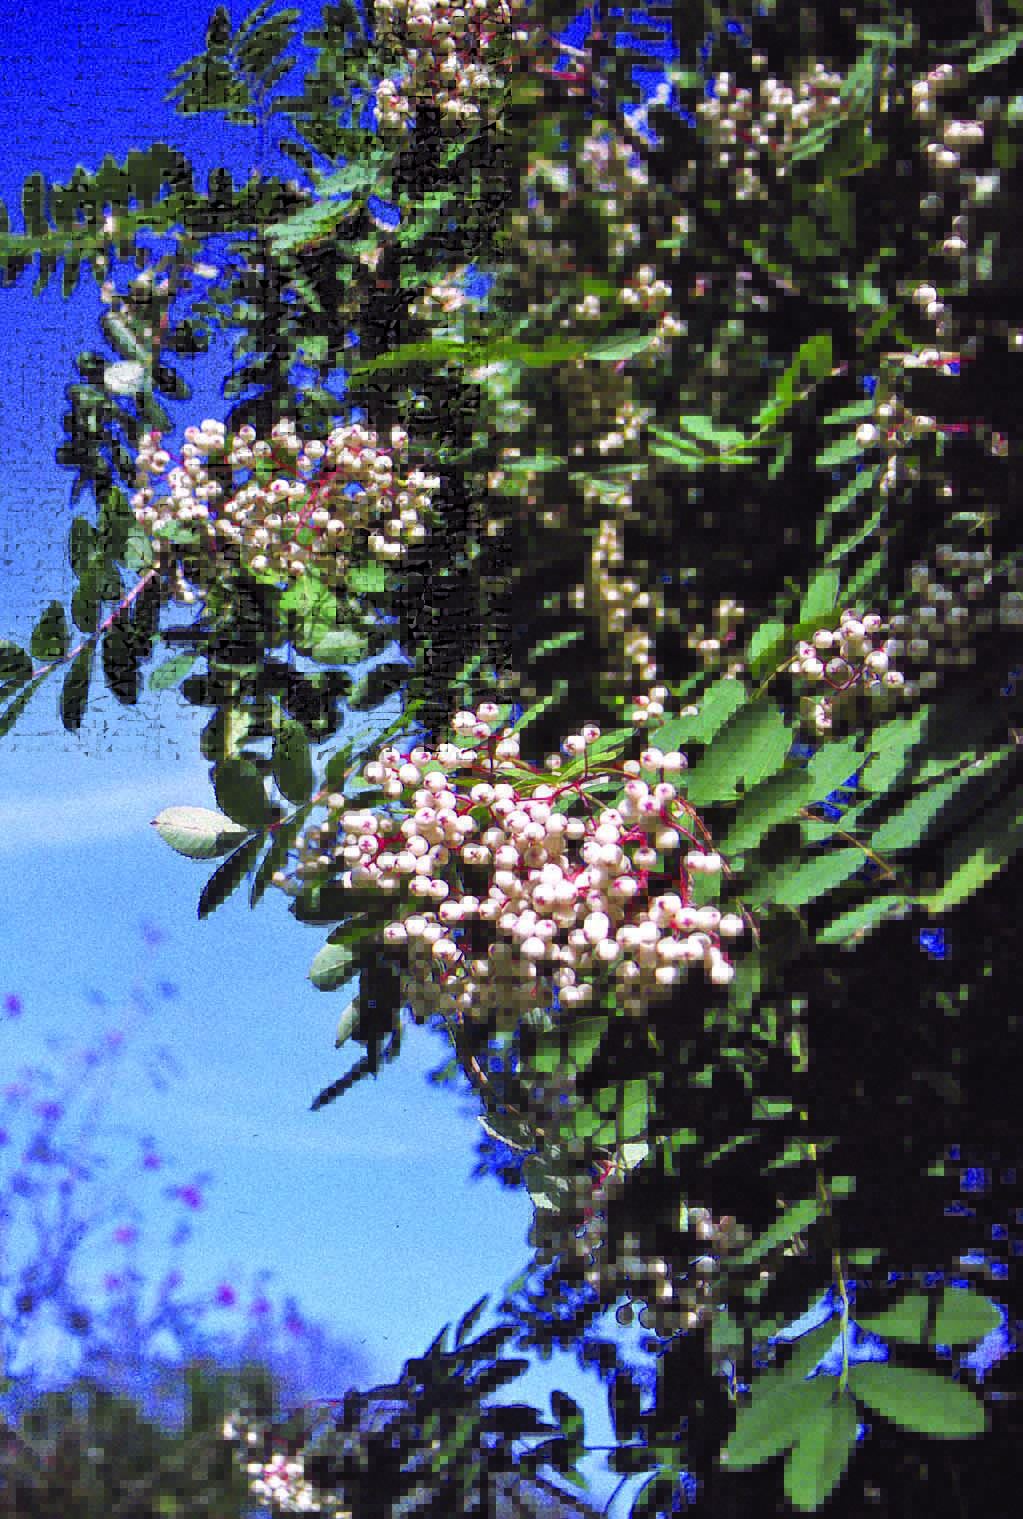 Sorbus hupehensis green leaves and white berries